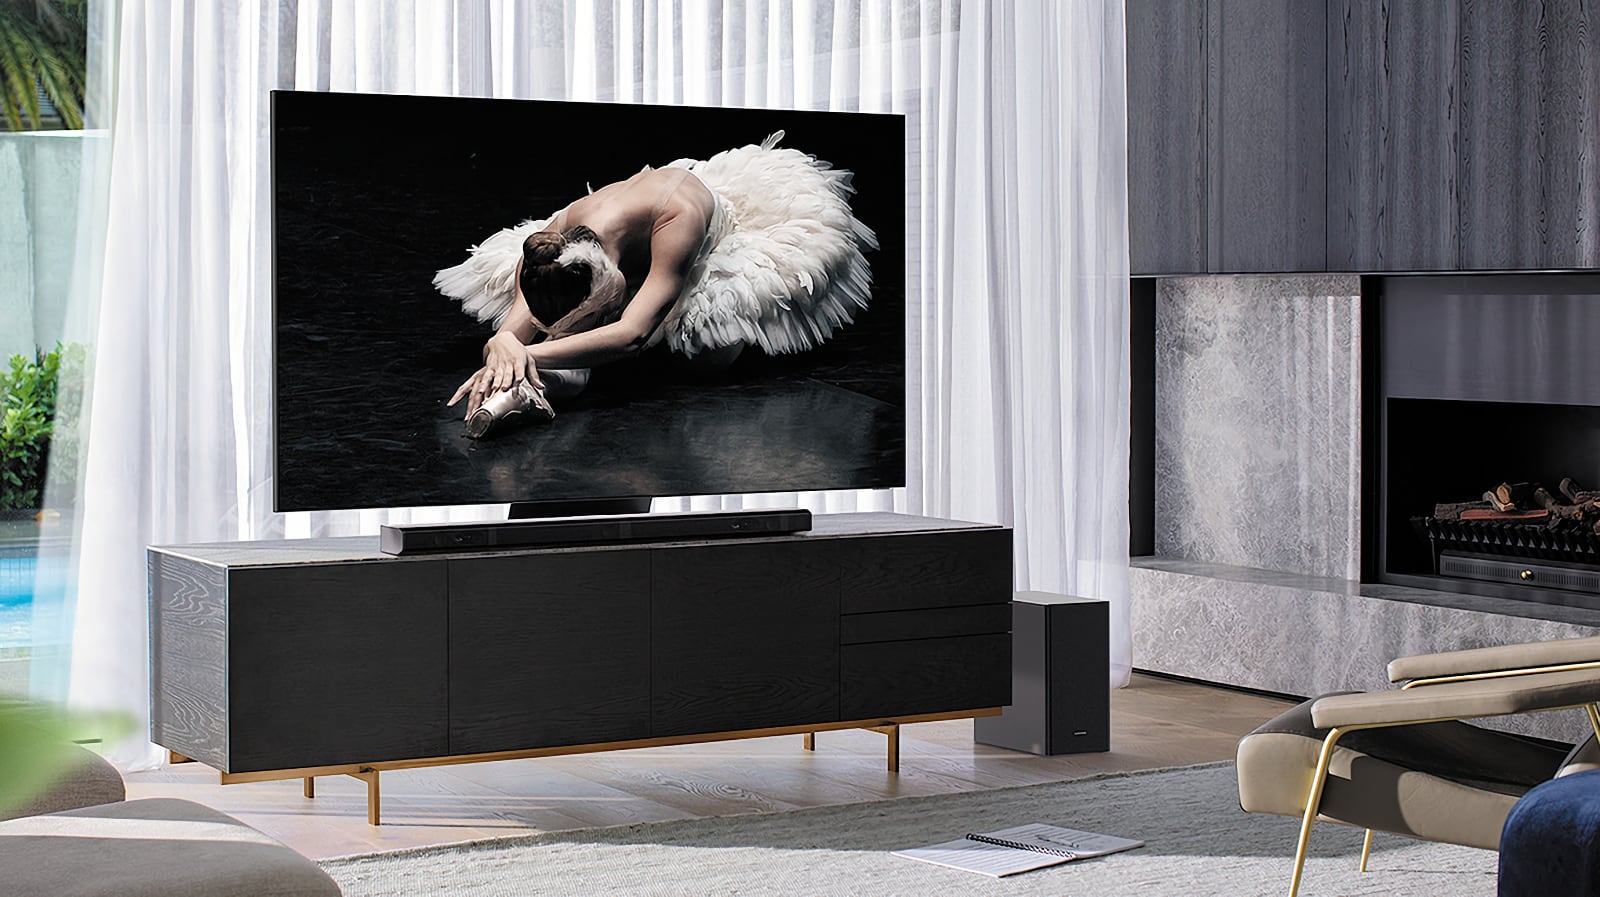 Samsung 2020 LCD TV